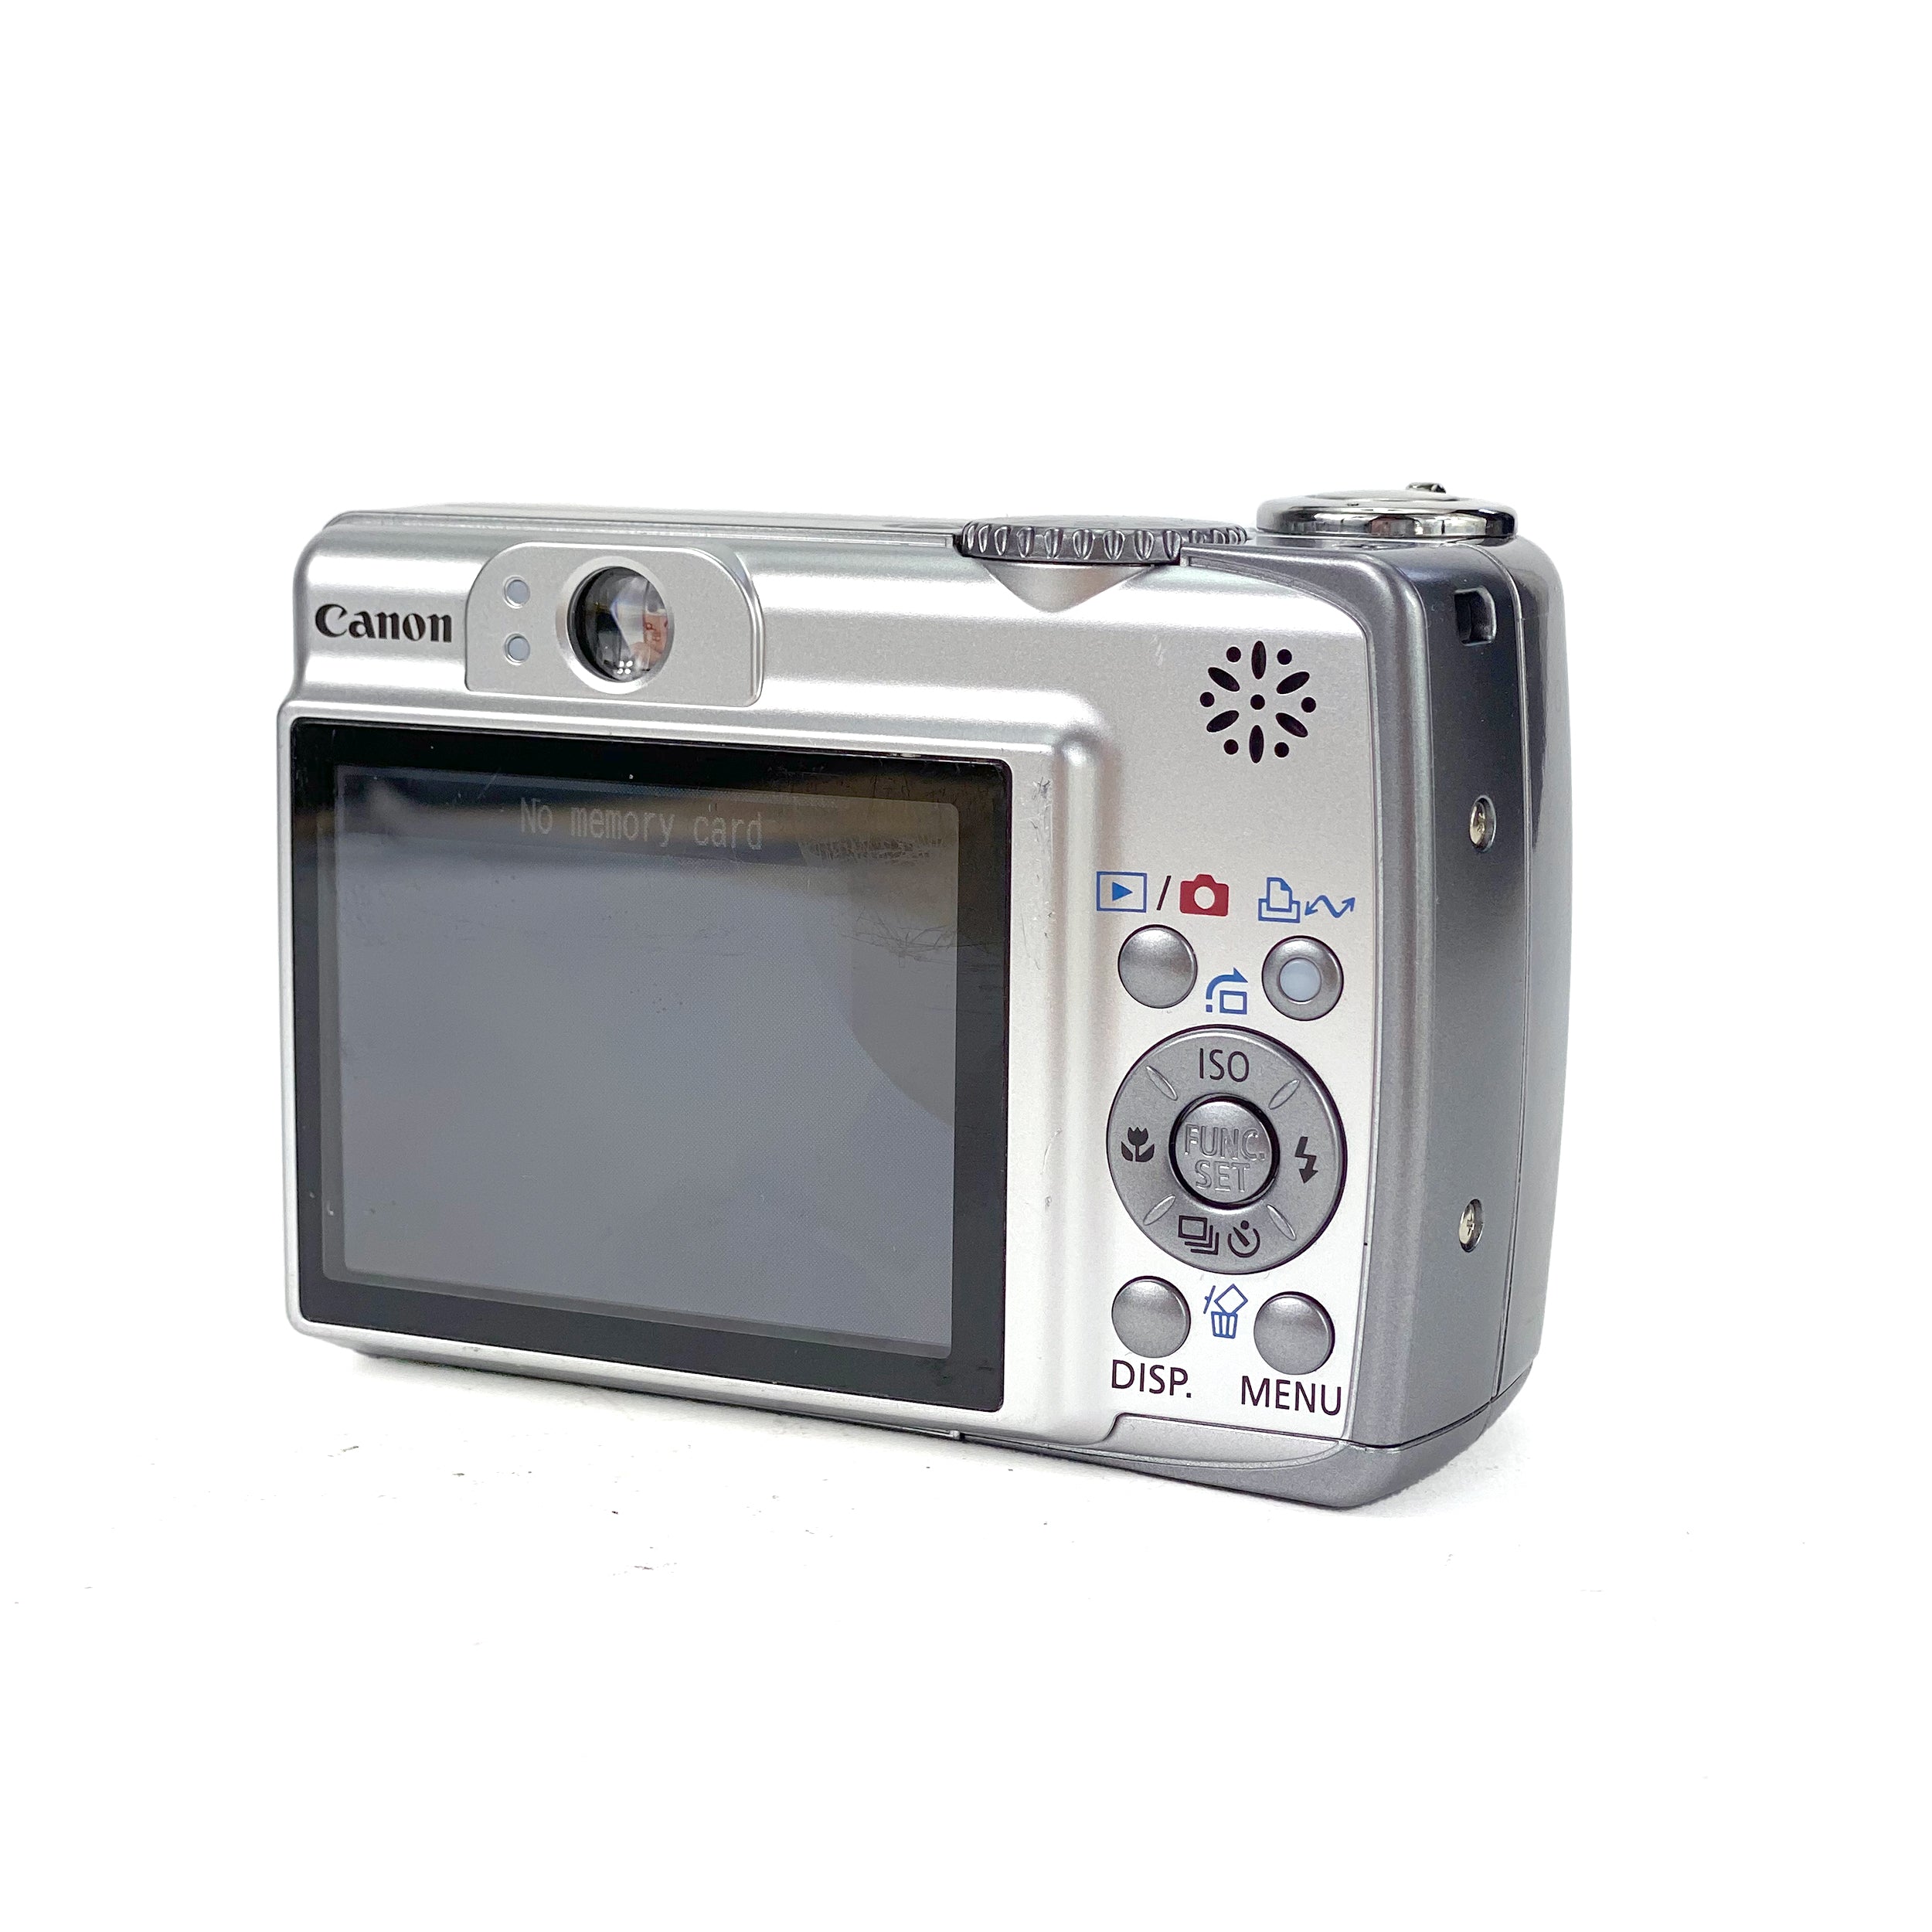 Canon PowerShot A560 Digital Compact